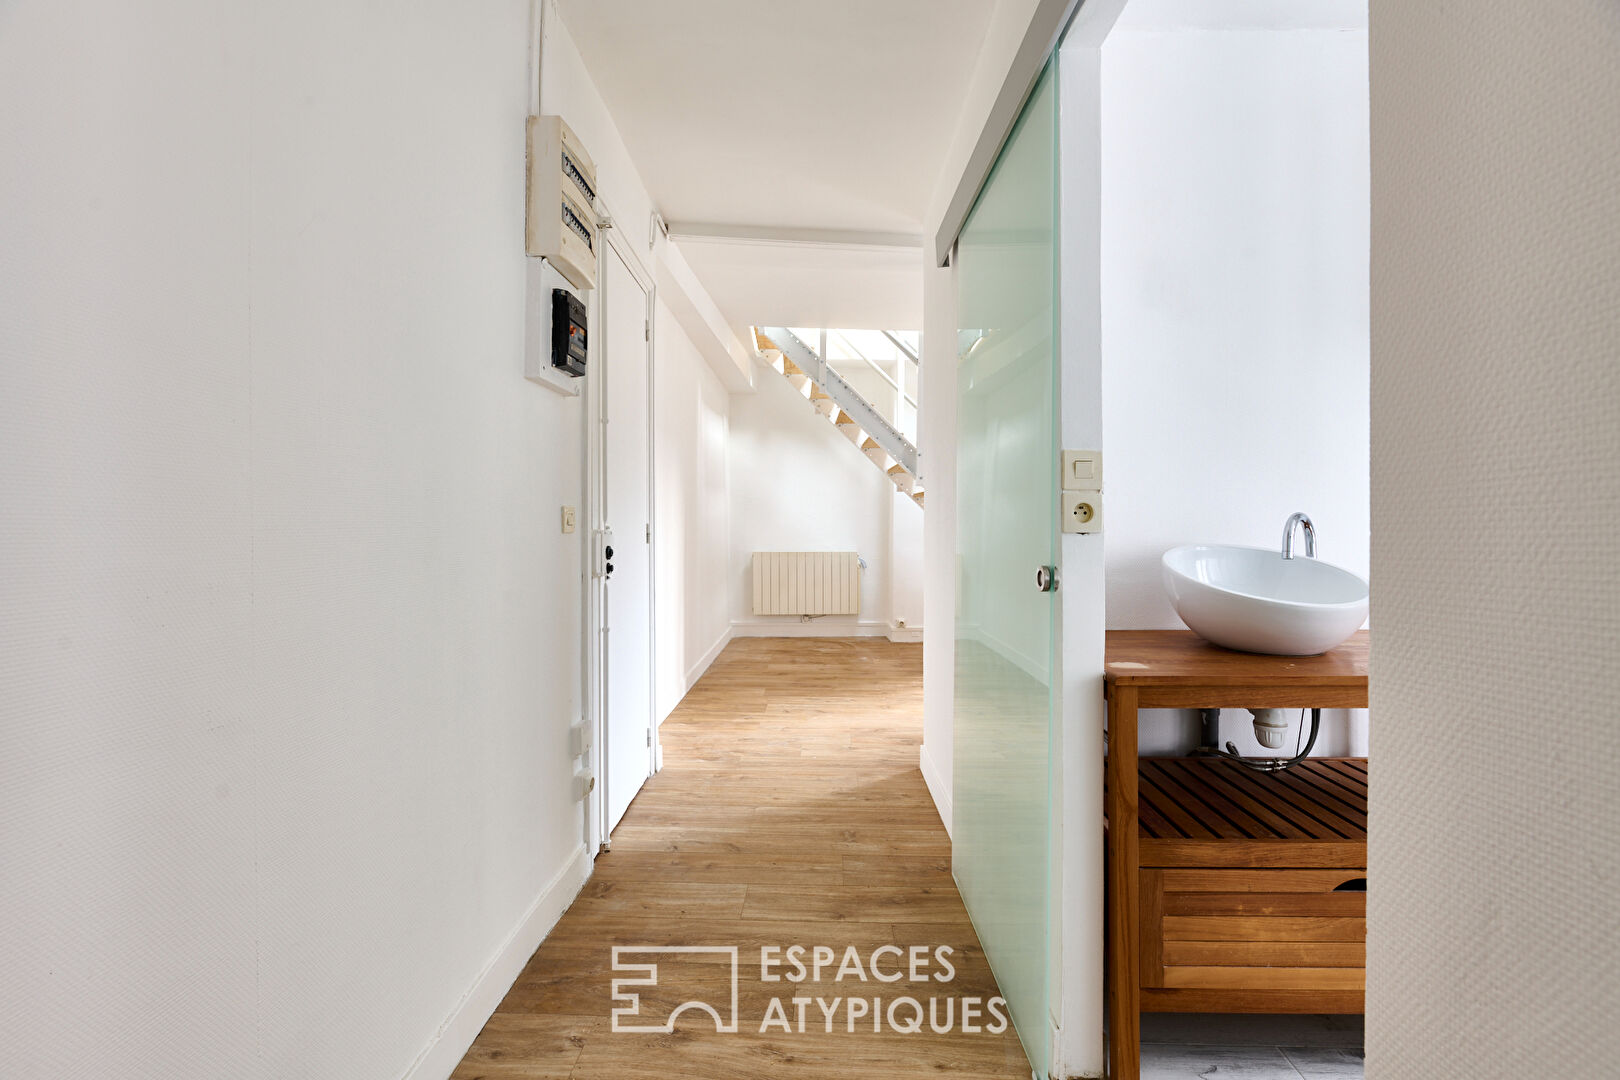 Top floor duplex in Epinettes – Batignolles